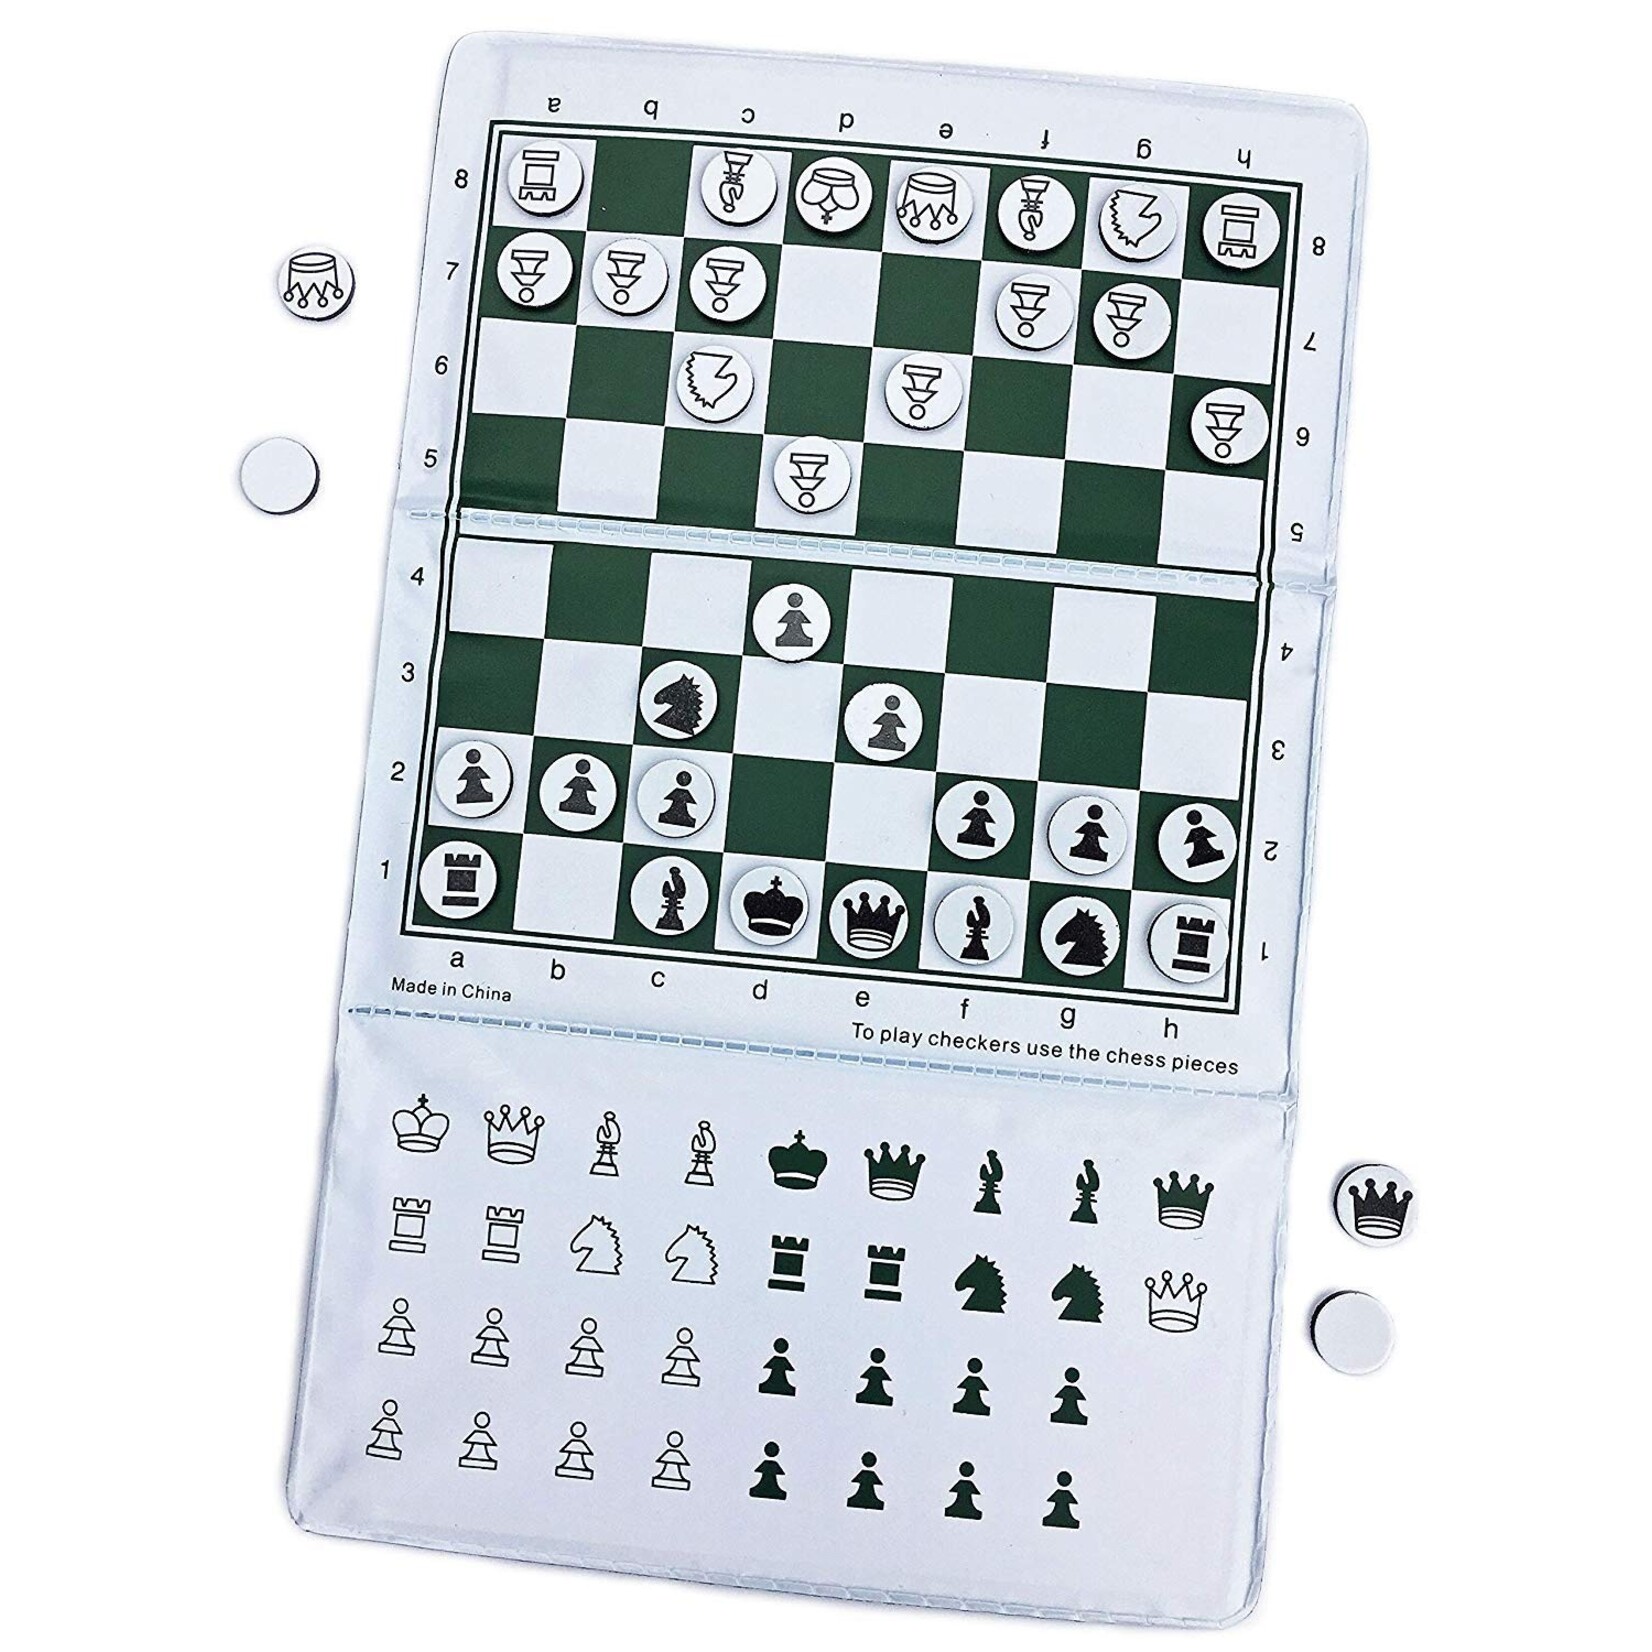 Magnetic Checkbook Chess Set 6" x 3.25" White Logo